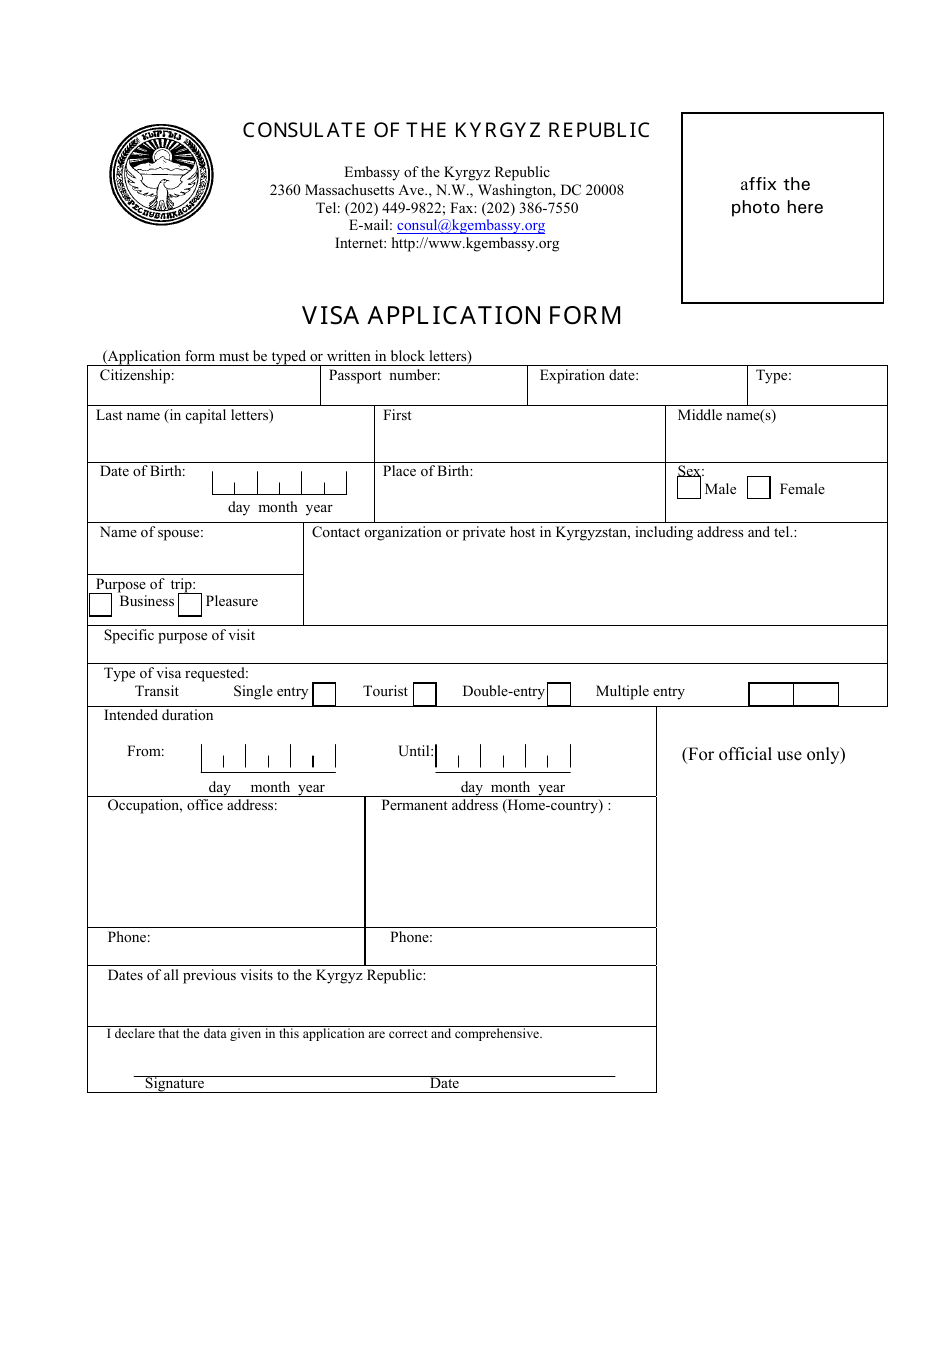 Kyrgyz Visa Application Form - Consulate of the Kyrgyz Republic - Washington, D.C., Page 1